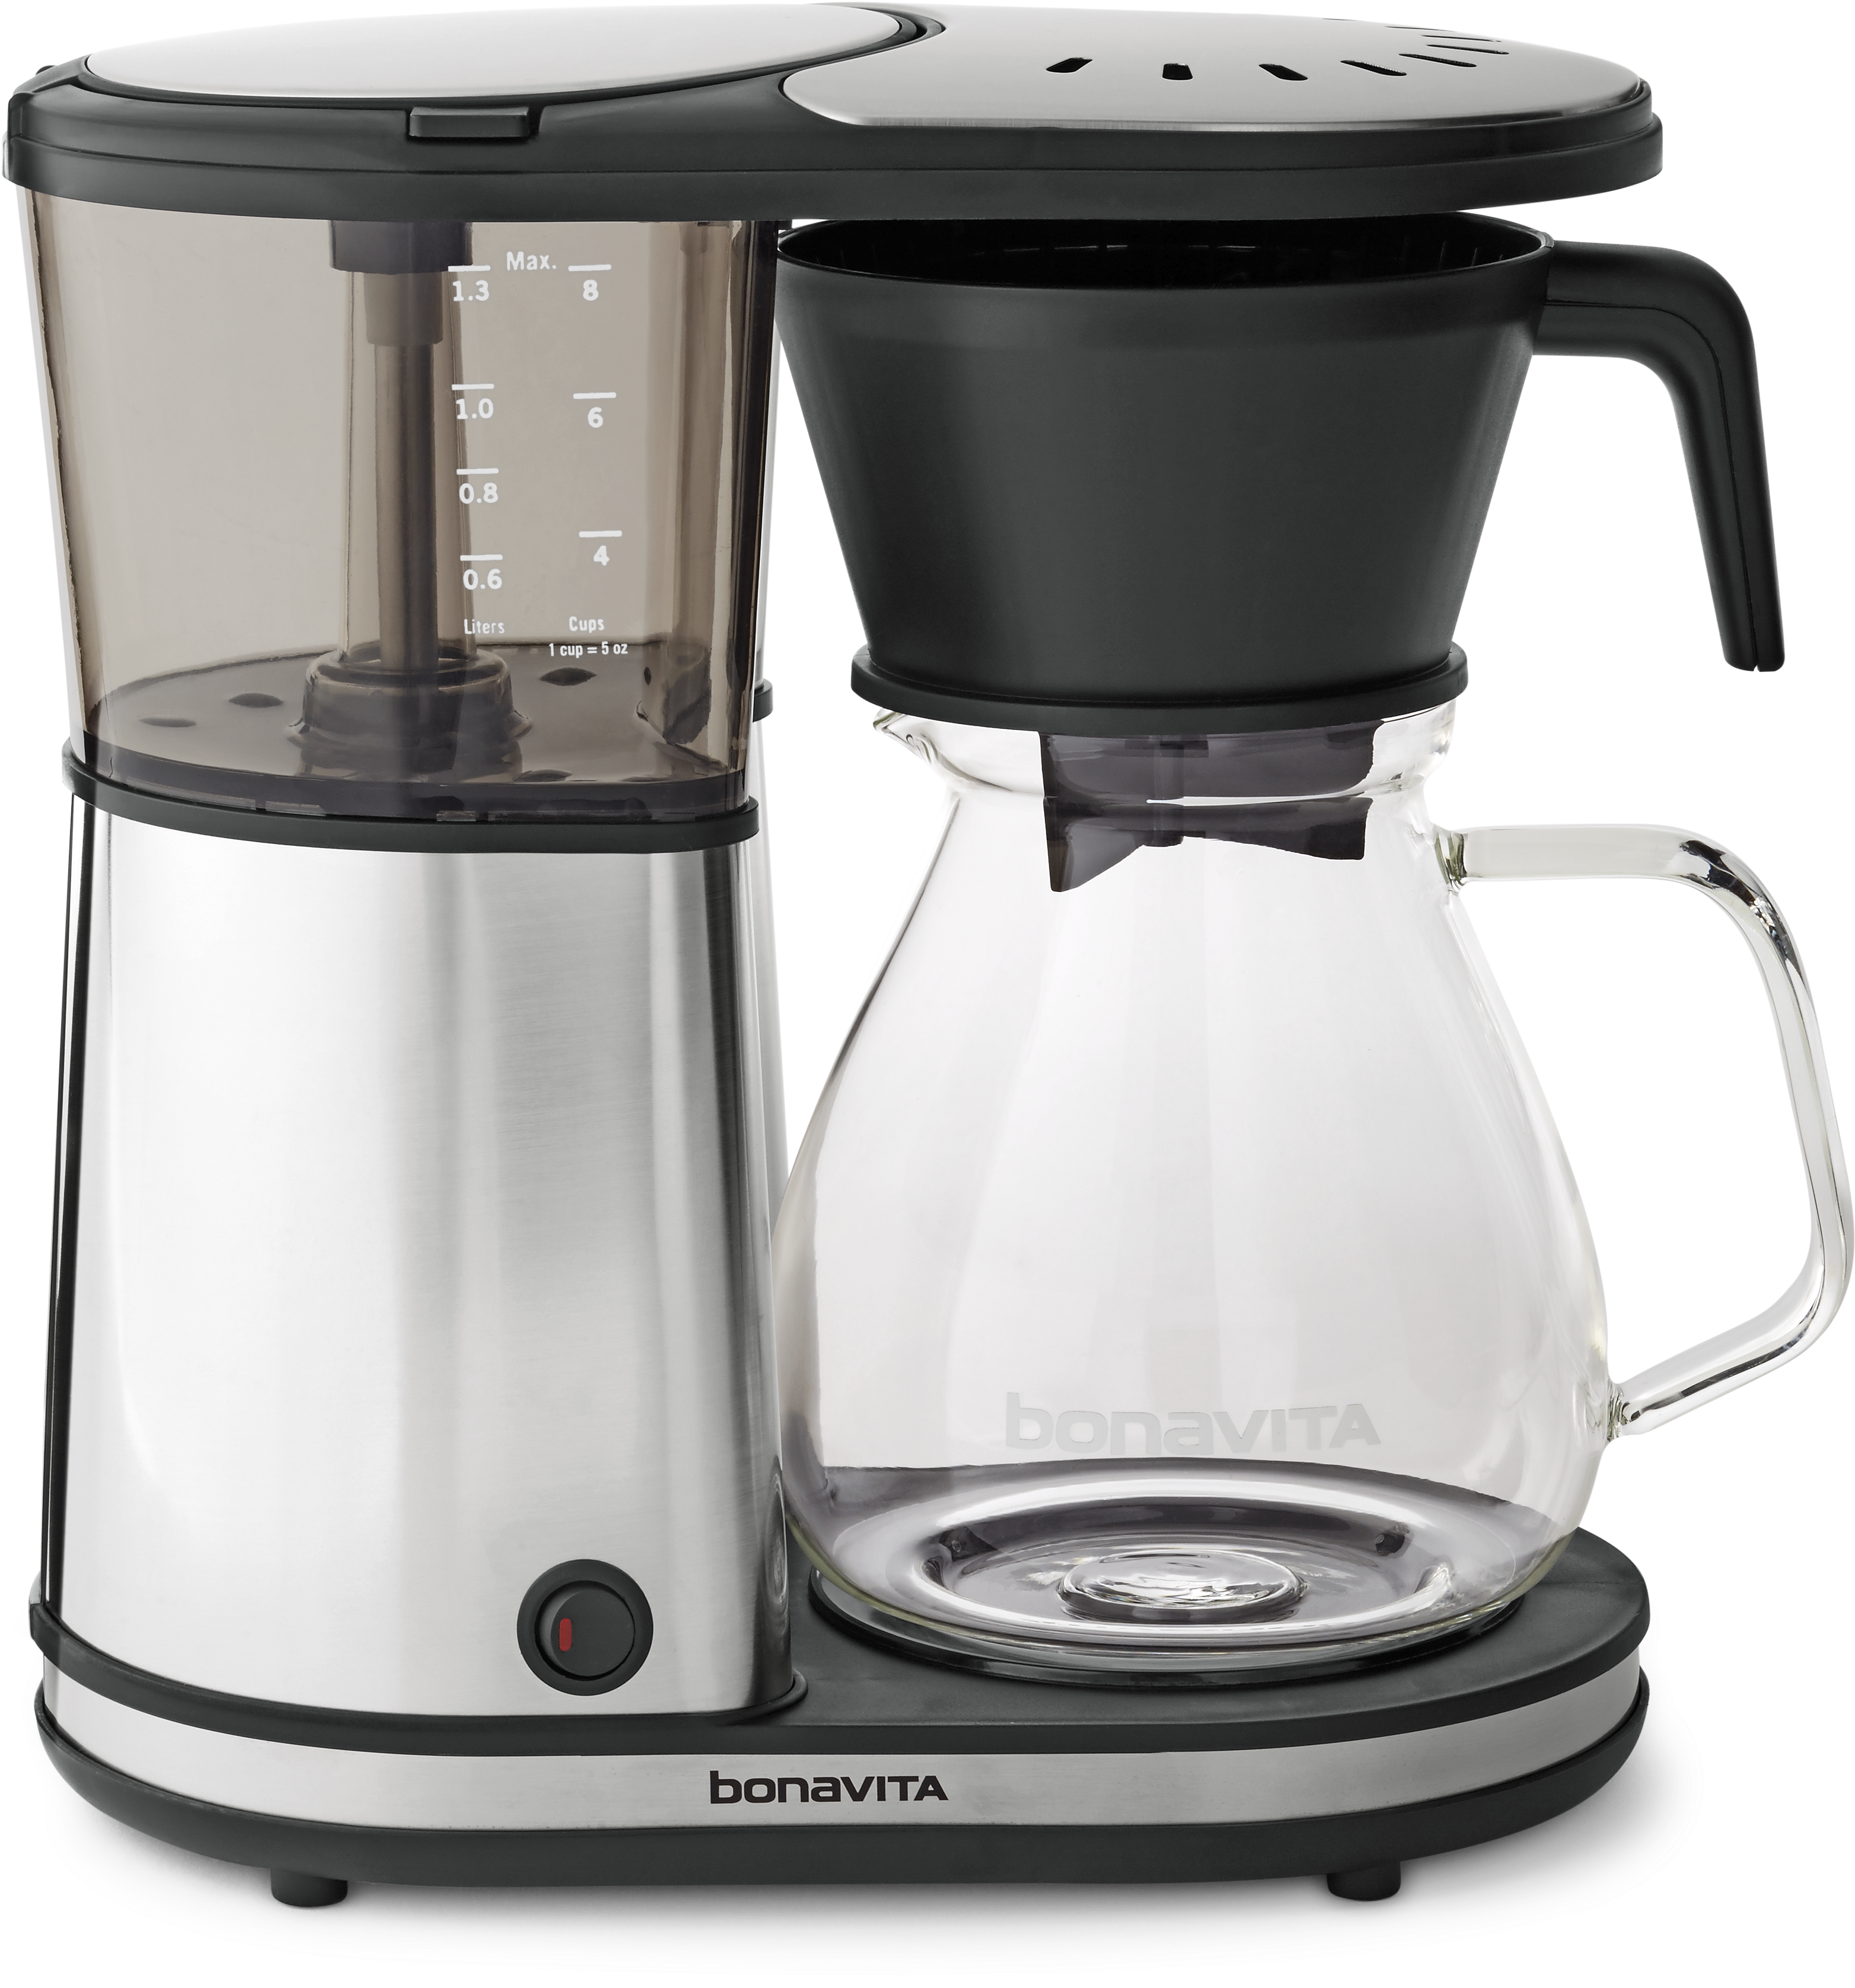 Bunn 42600 0002 Hg Phase Brew 8 Cup Coffee Maker - Bonavita Bv1901gw 8-cup Coffee Maker With Glass Carafe (3791x4623)